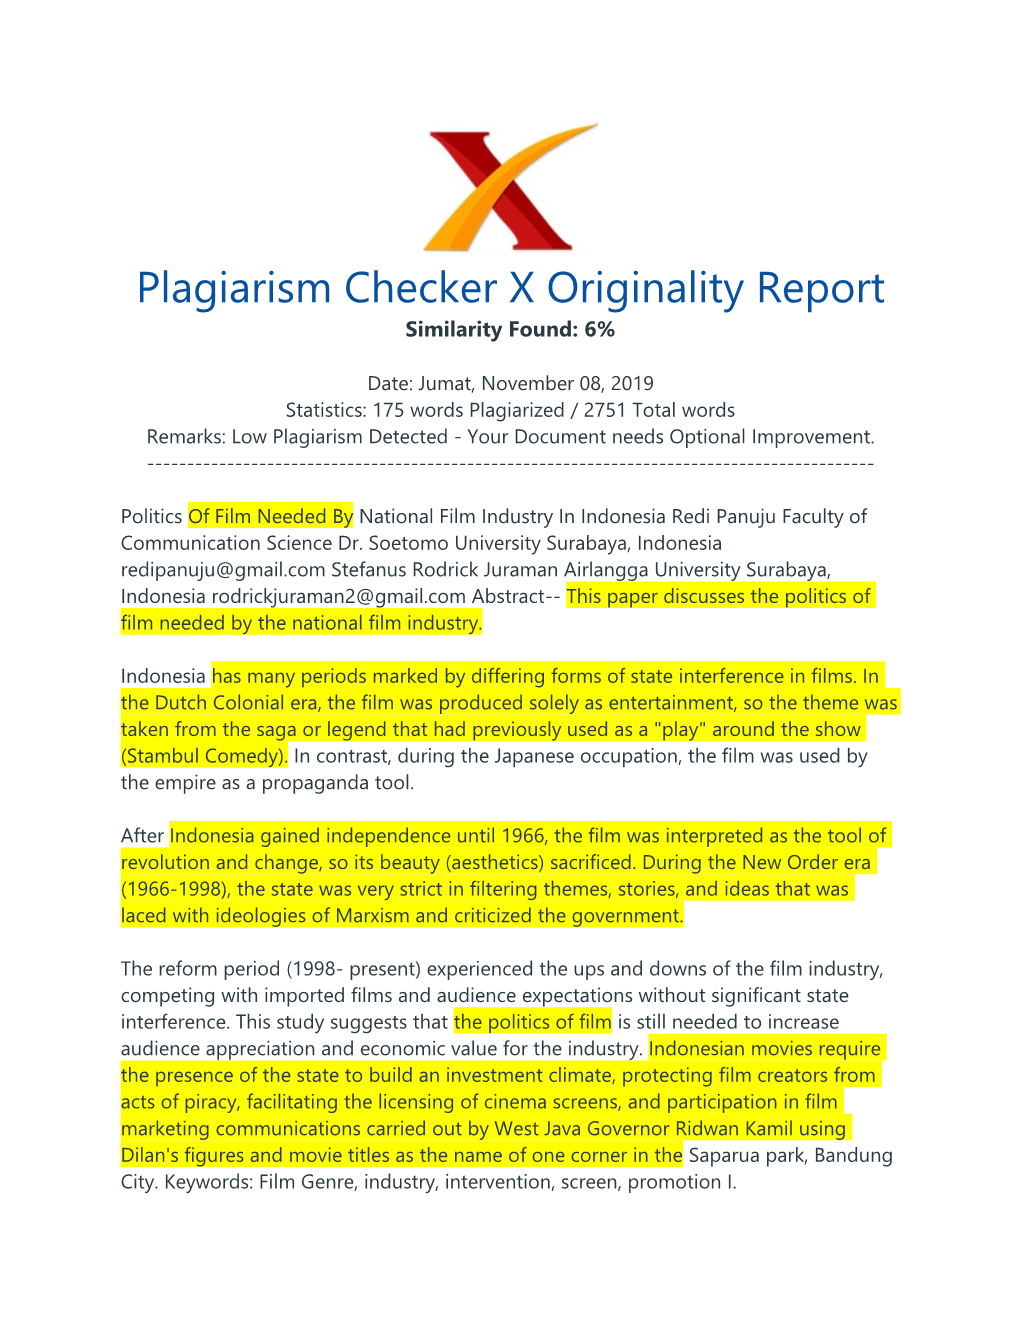 Plagiarism Checker X Originality Report Similarity Found: 6%